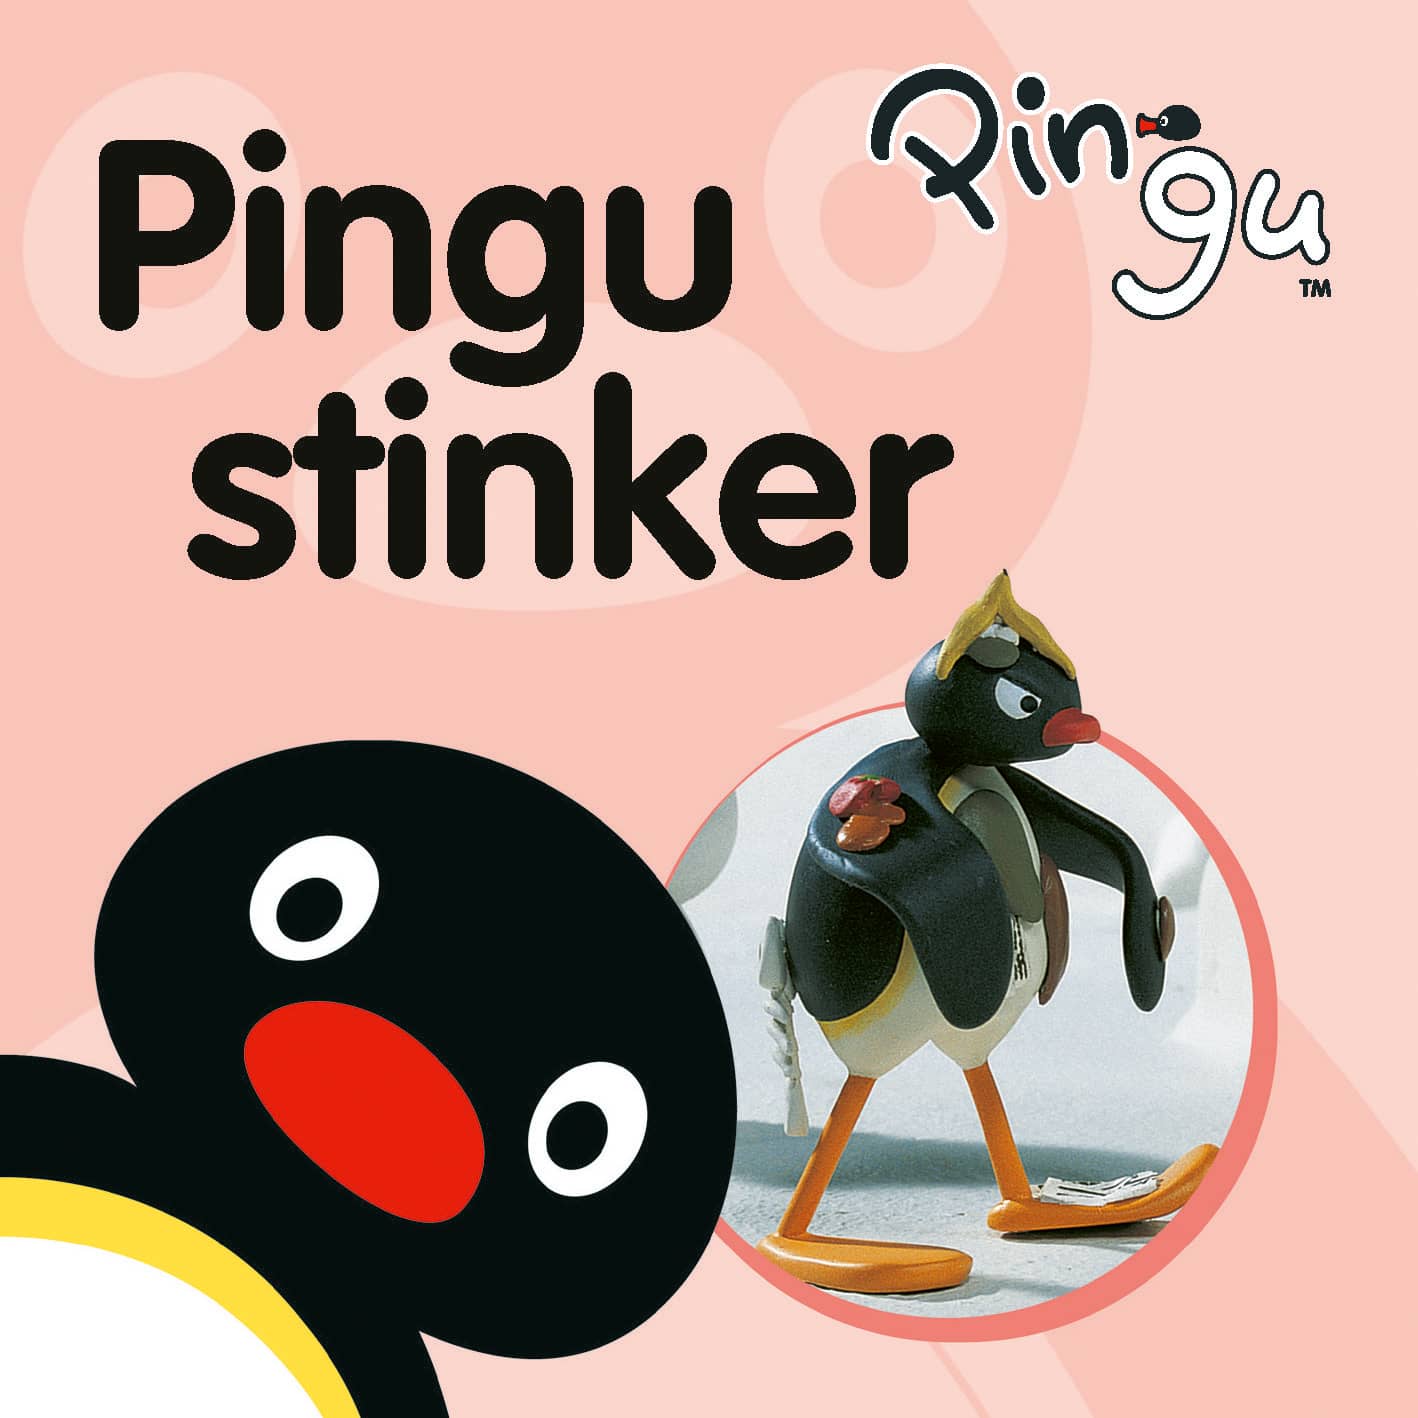 Pingu stinker